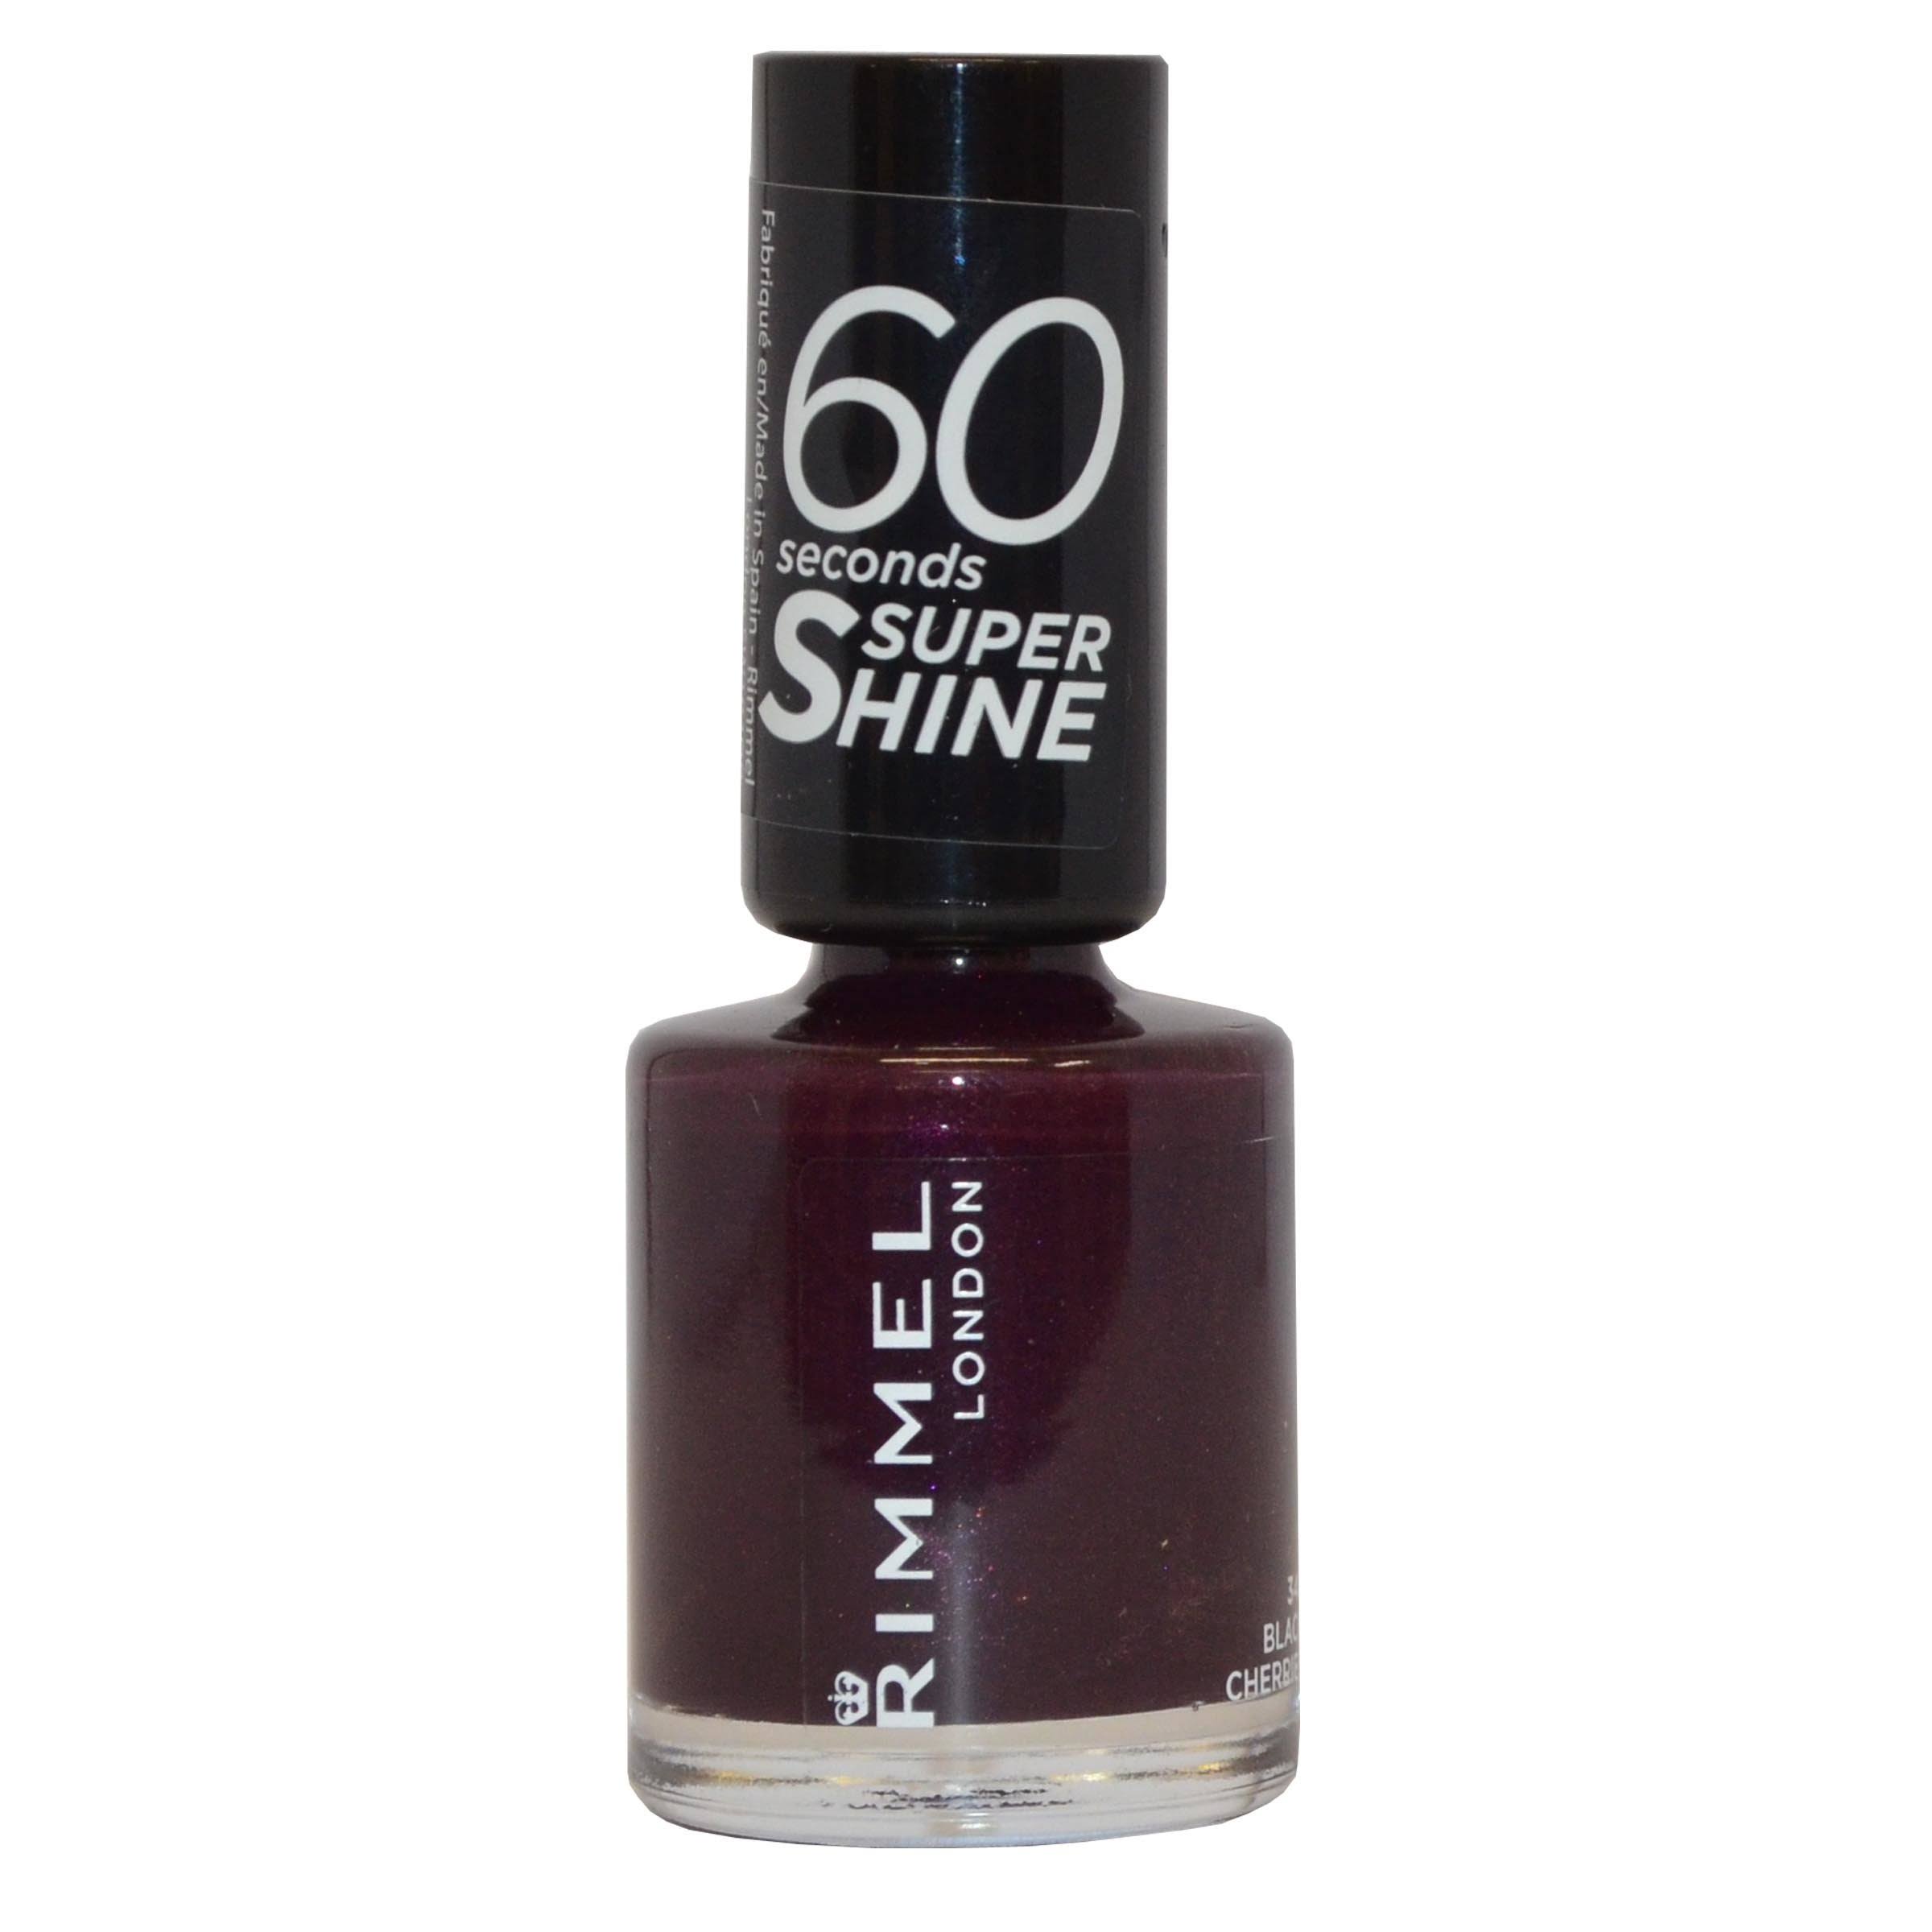 Rimmel London 60 Seconds Super Shine Nail Polish - 345 Black Cherries, 8ml